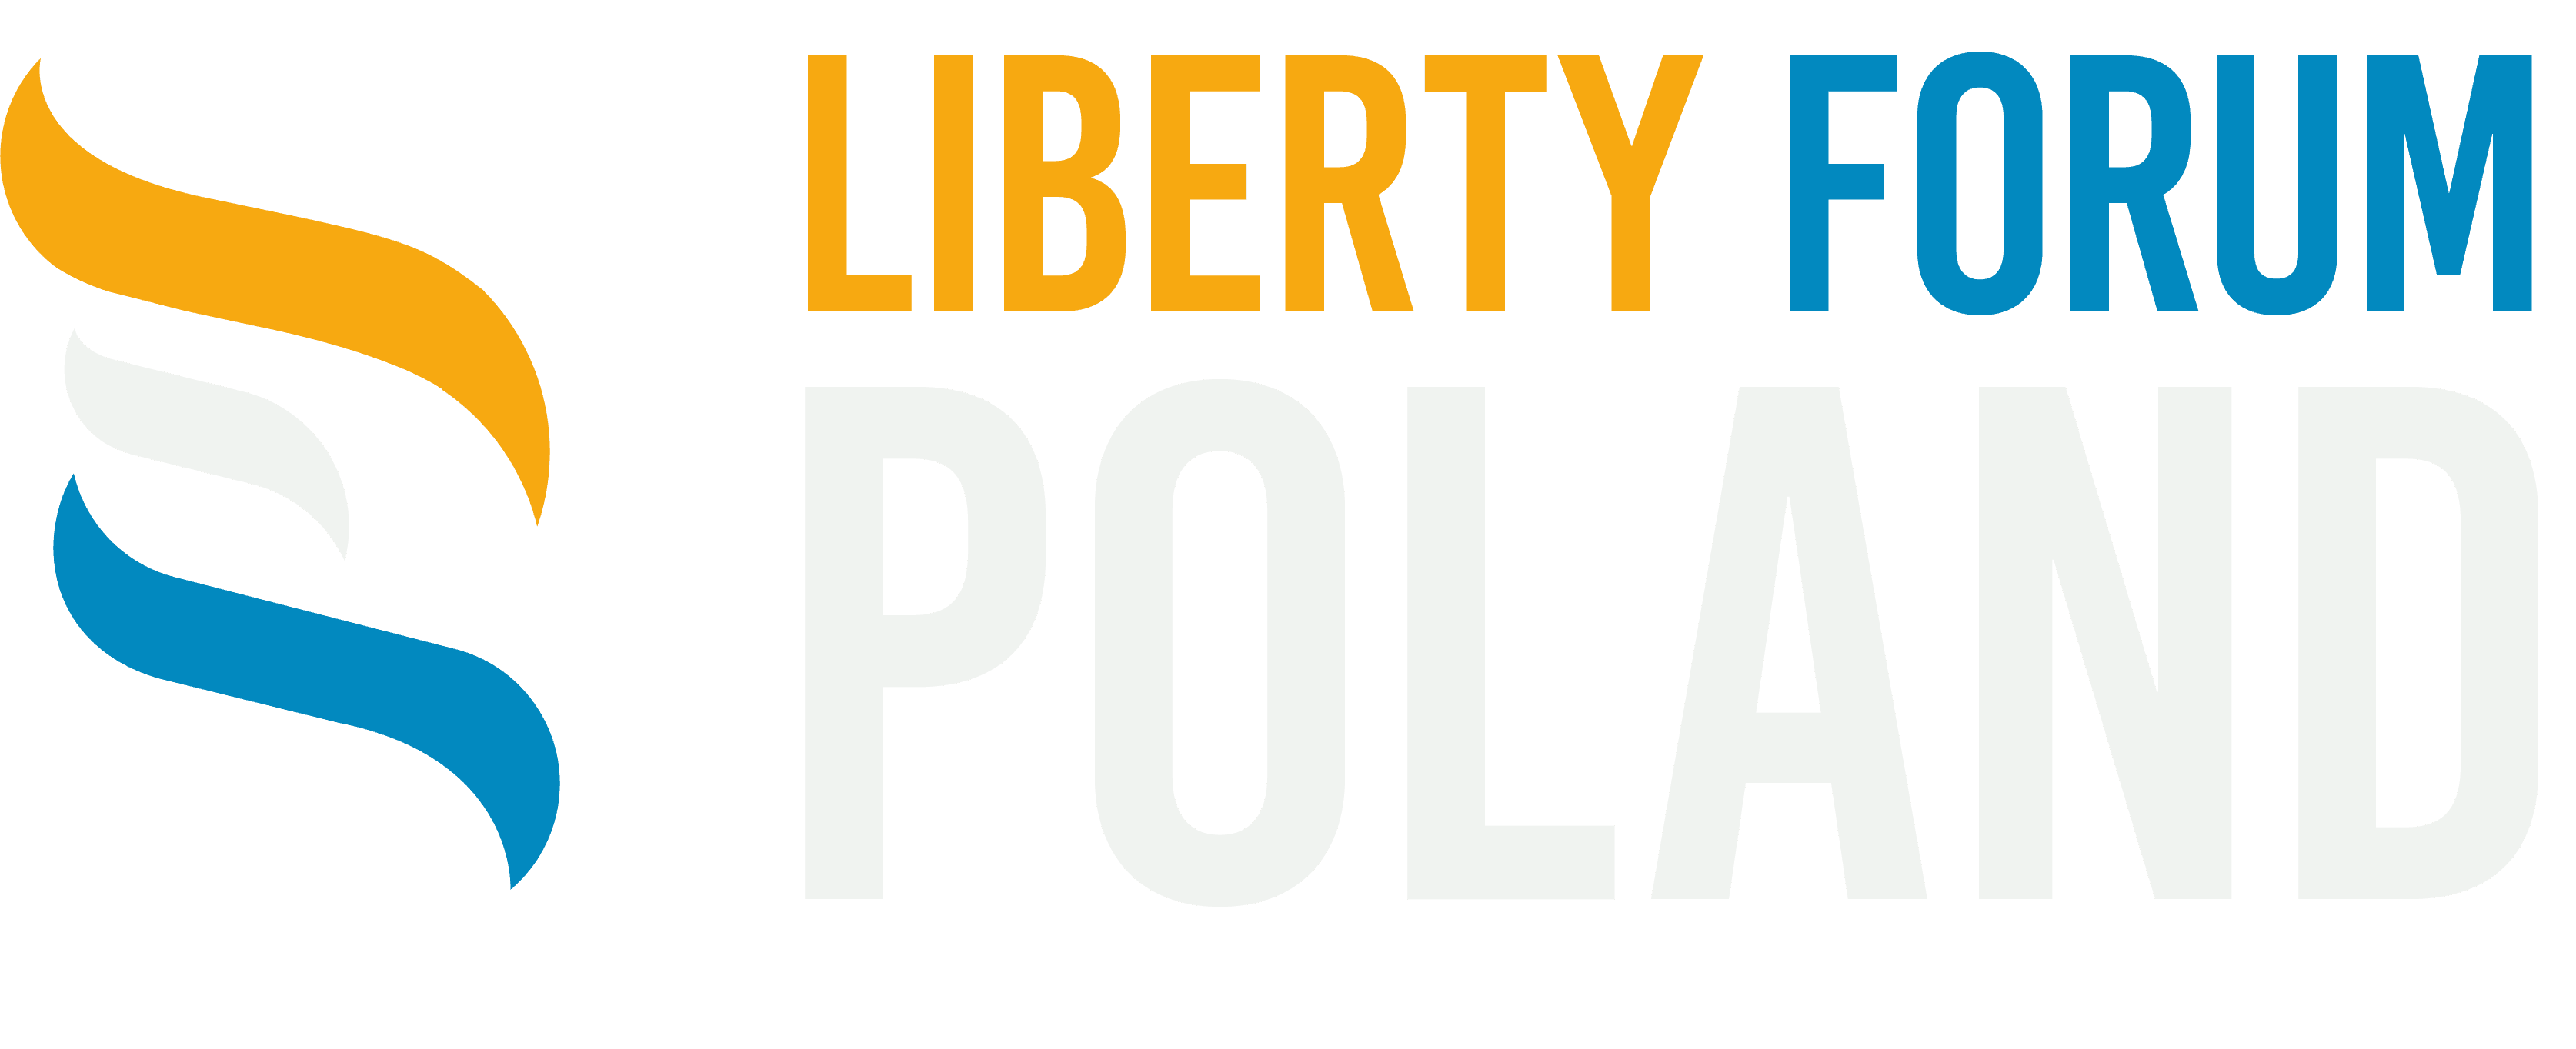 Liberty Forum Poland